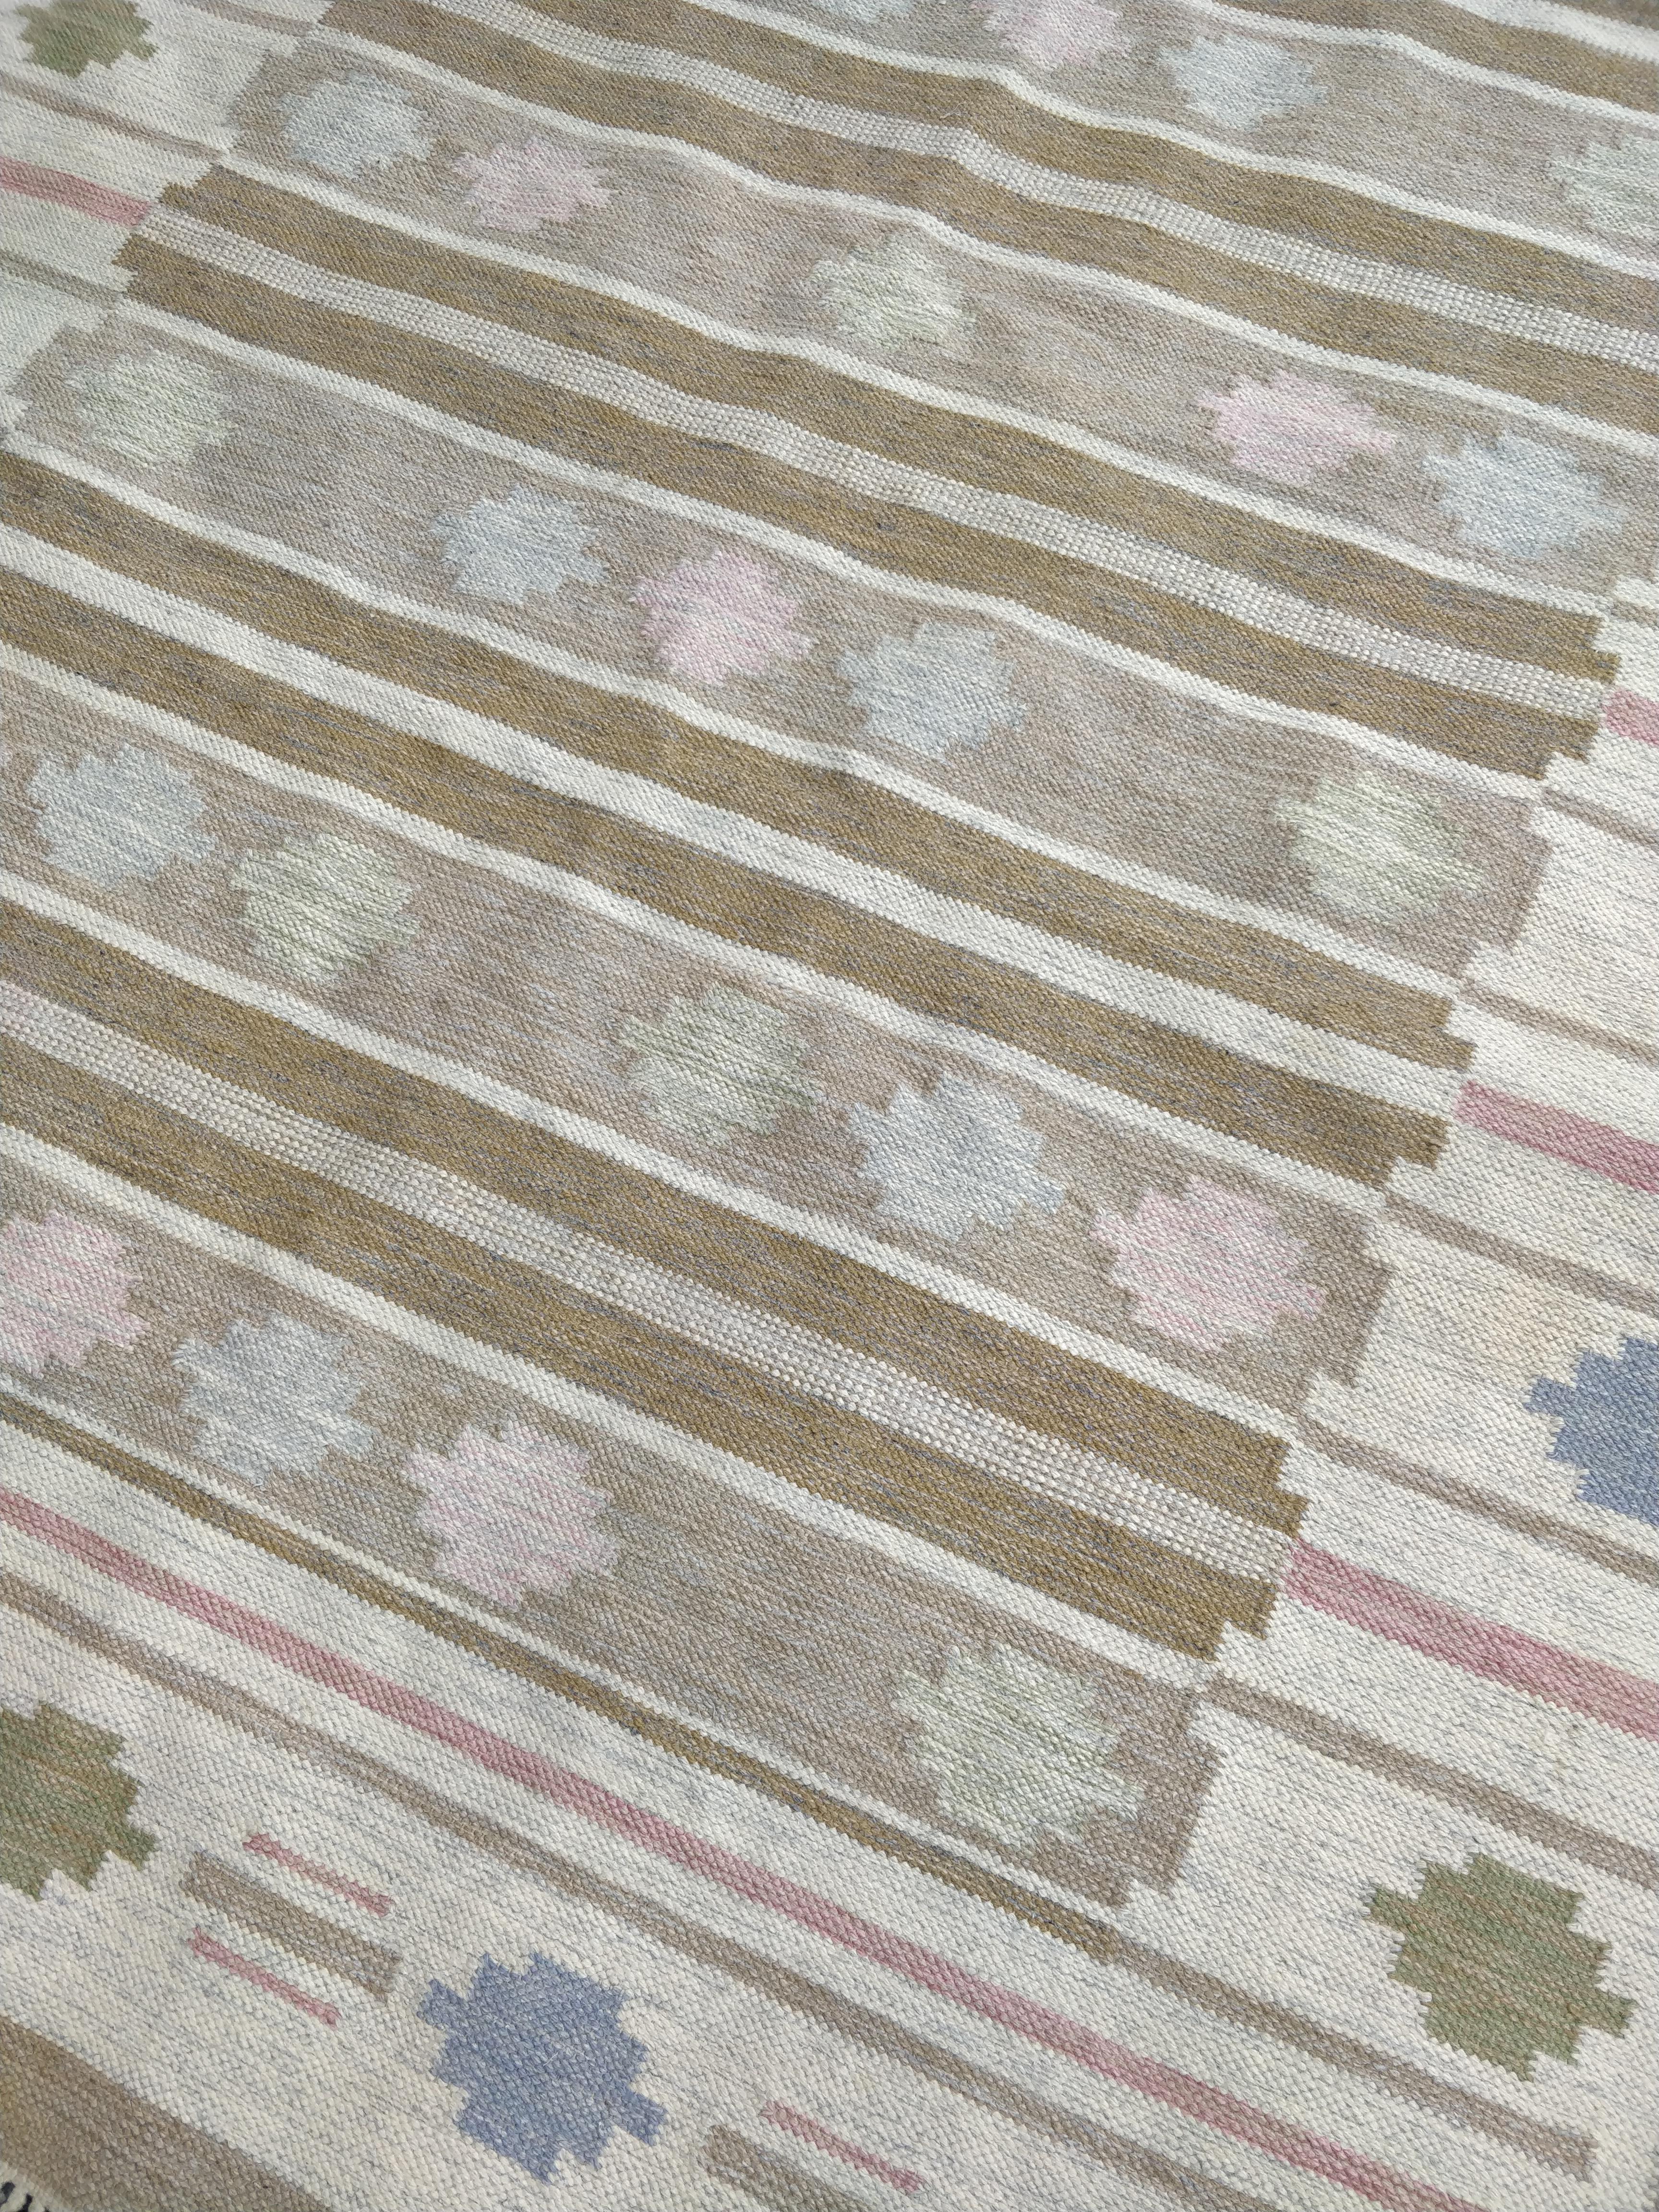 Mid-20th Century  Flat-weave Kilim carpet by Swedish textile designer Anna Johanna Ångström   For Sale